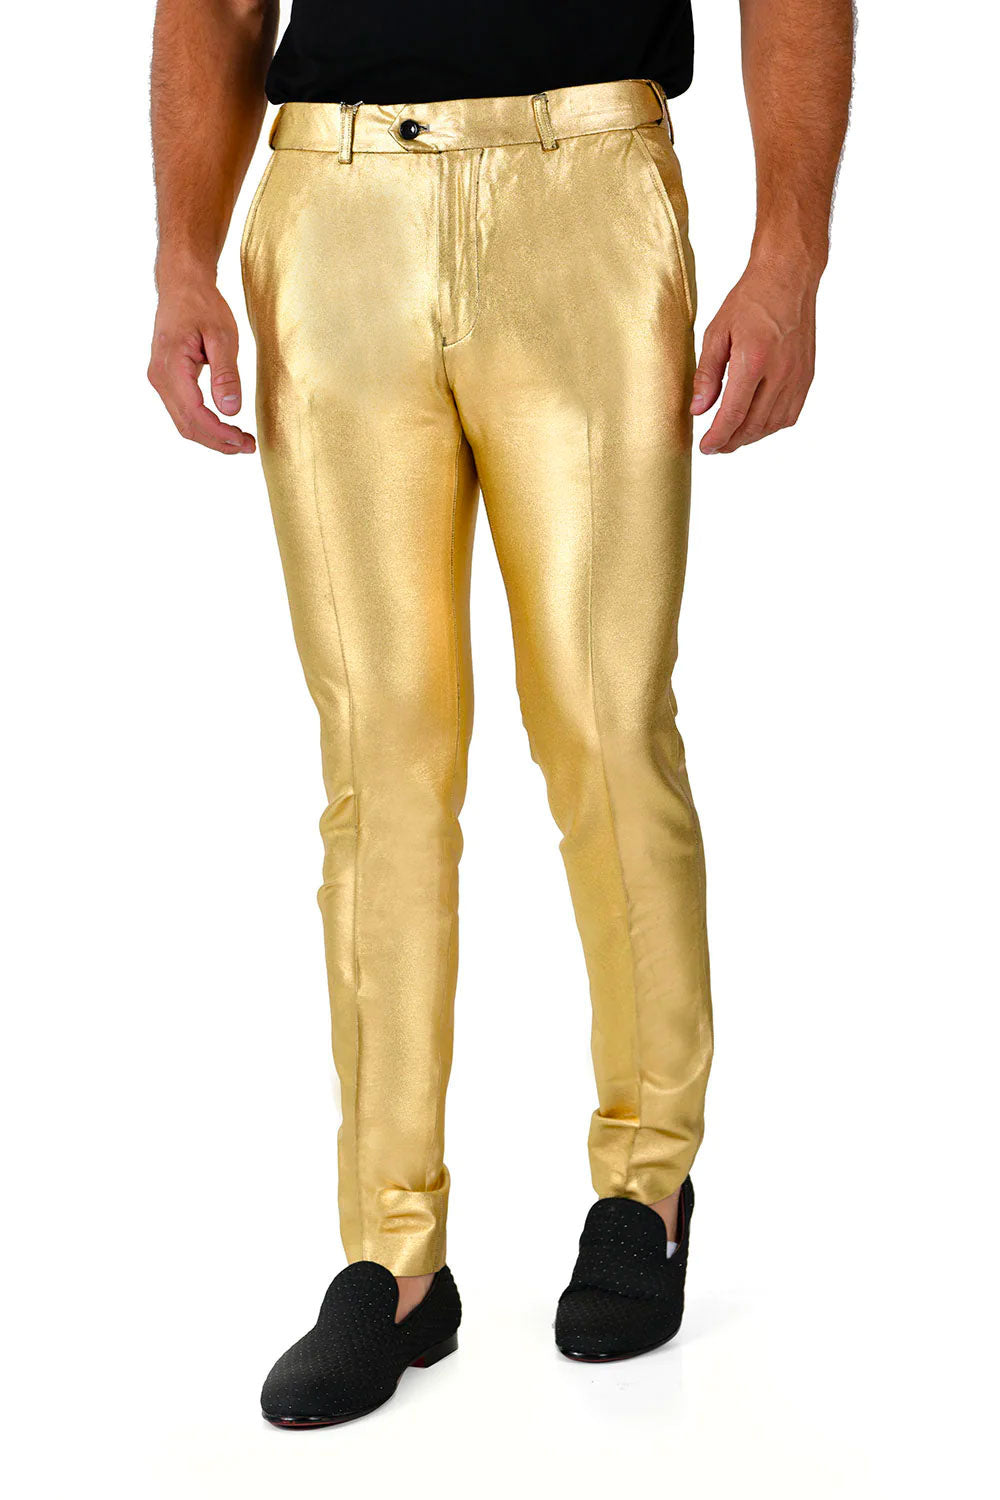 Barabas Men's Glossy Pattern Design Sparkly Luxury Dress Pants CP95 Gold